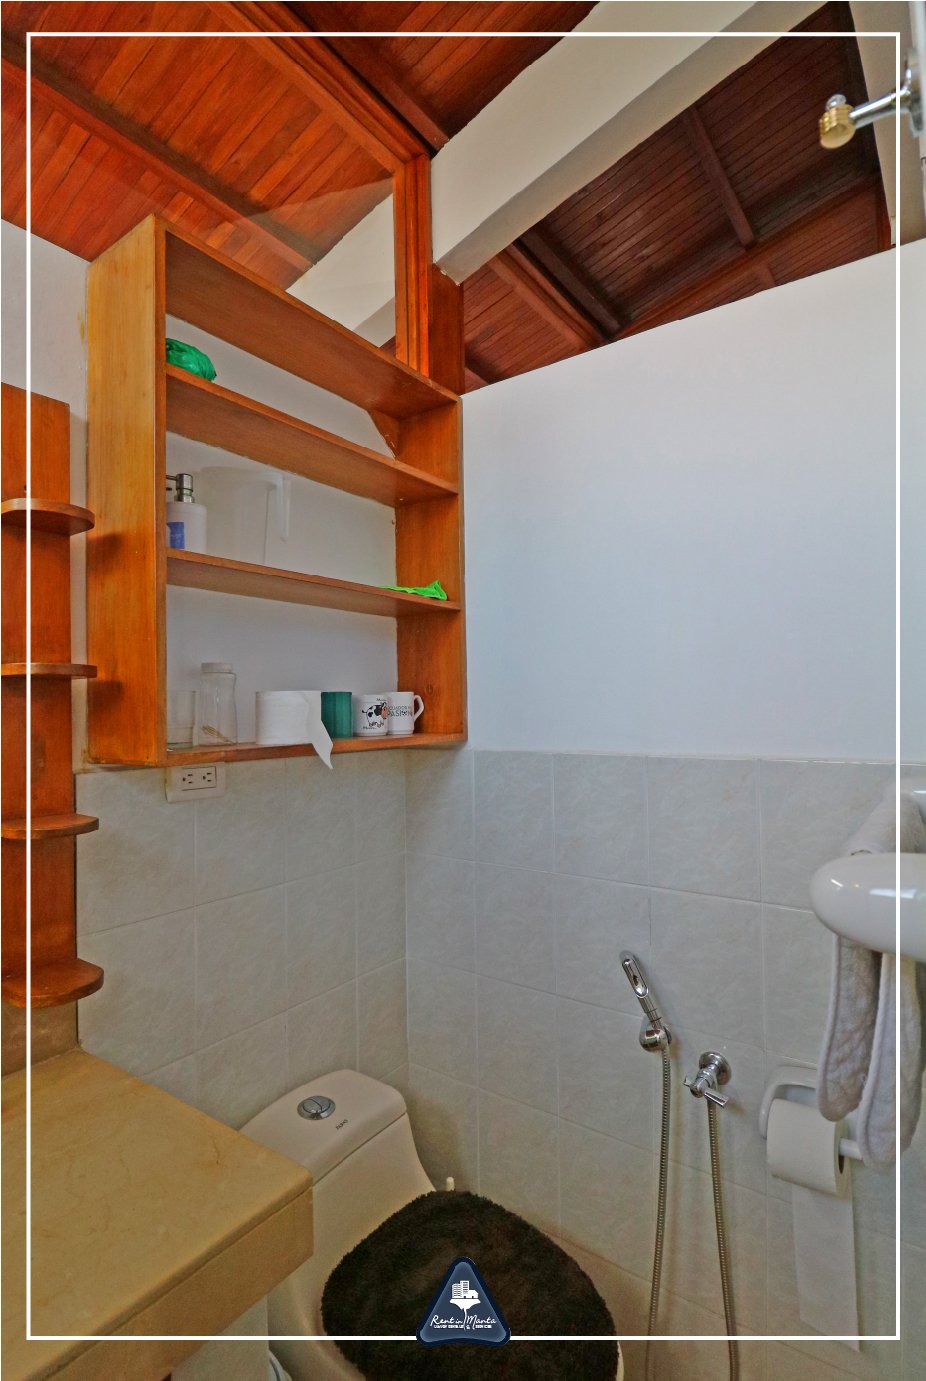 Rent in. Manta - property - Casa en Renta Urb Pedro Balda-64.jpg